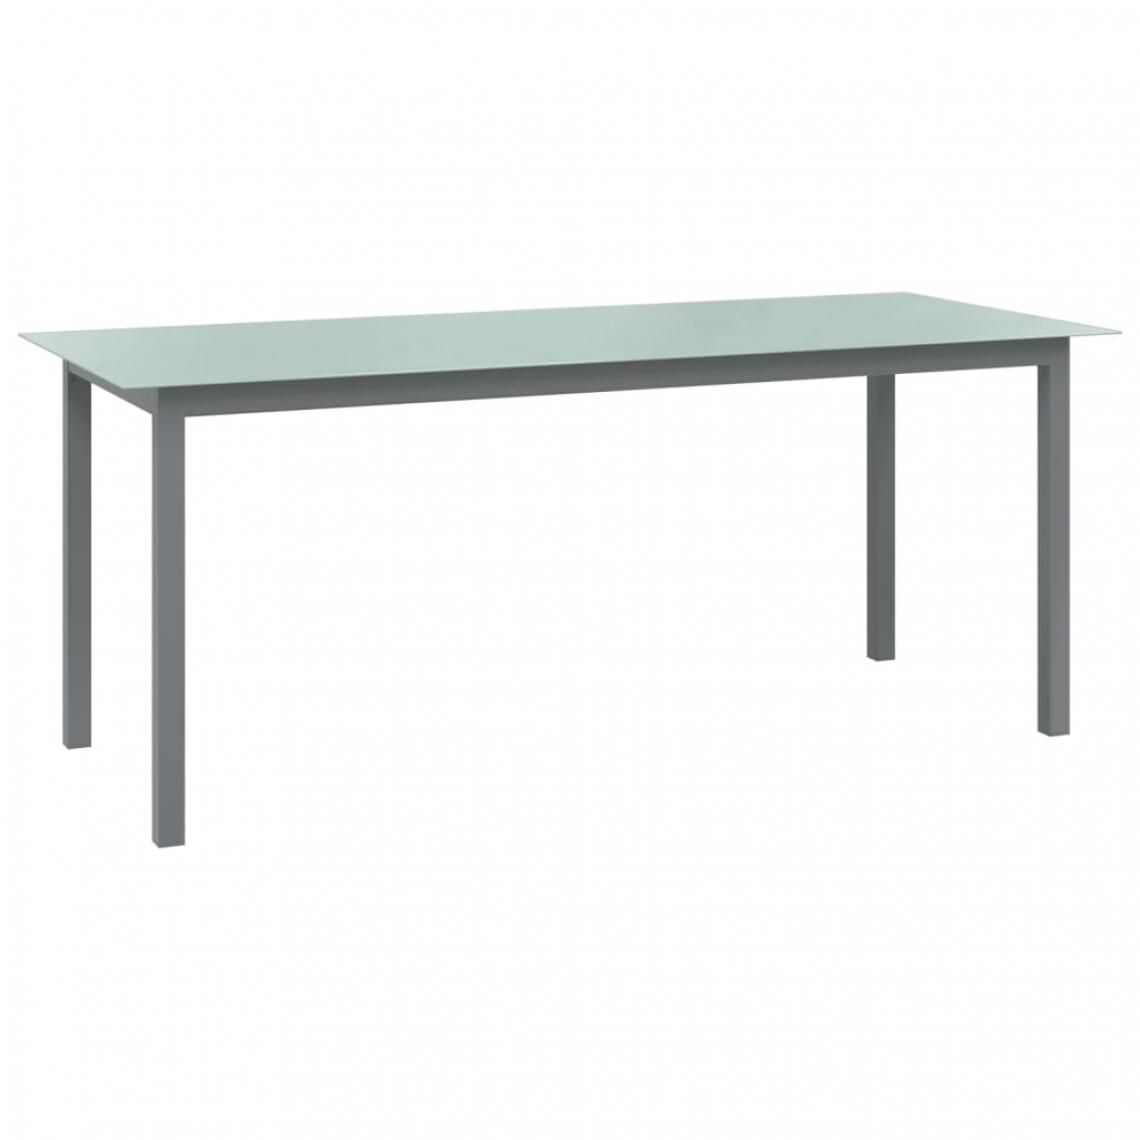 Vidaxl - vidaXL Table de jardin Gris clair 190x90x74 cm Aluminium et verre - Tables de jardin